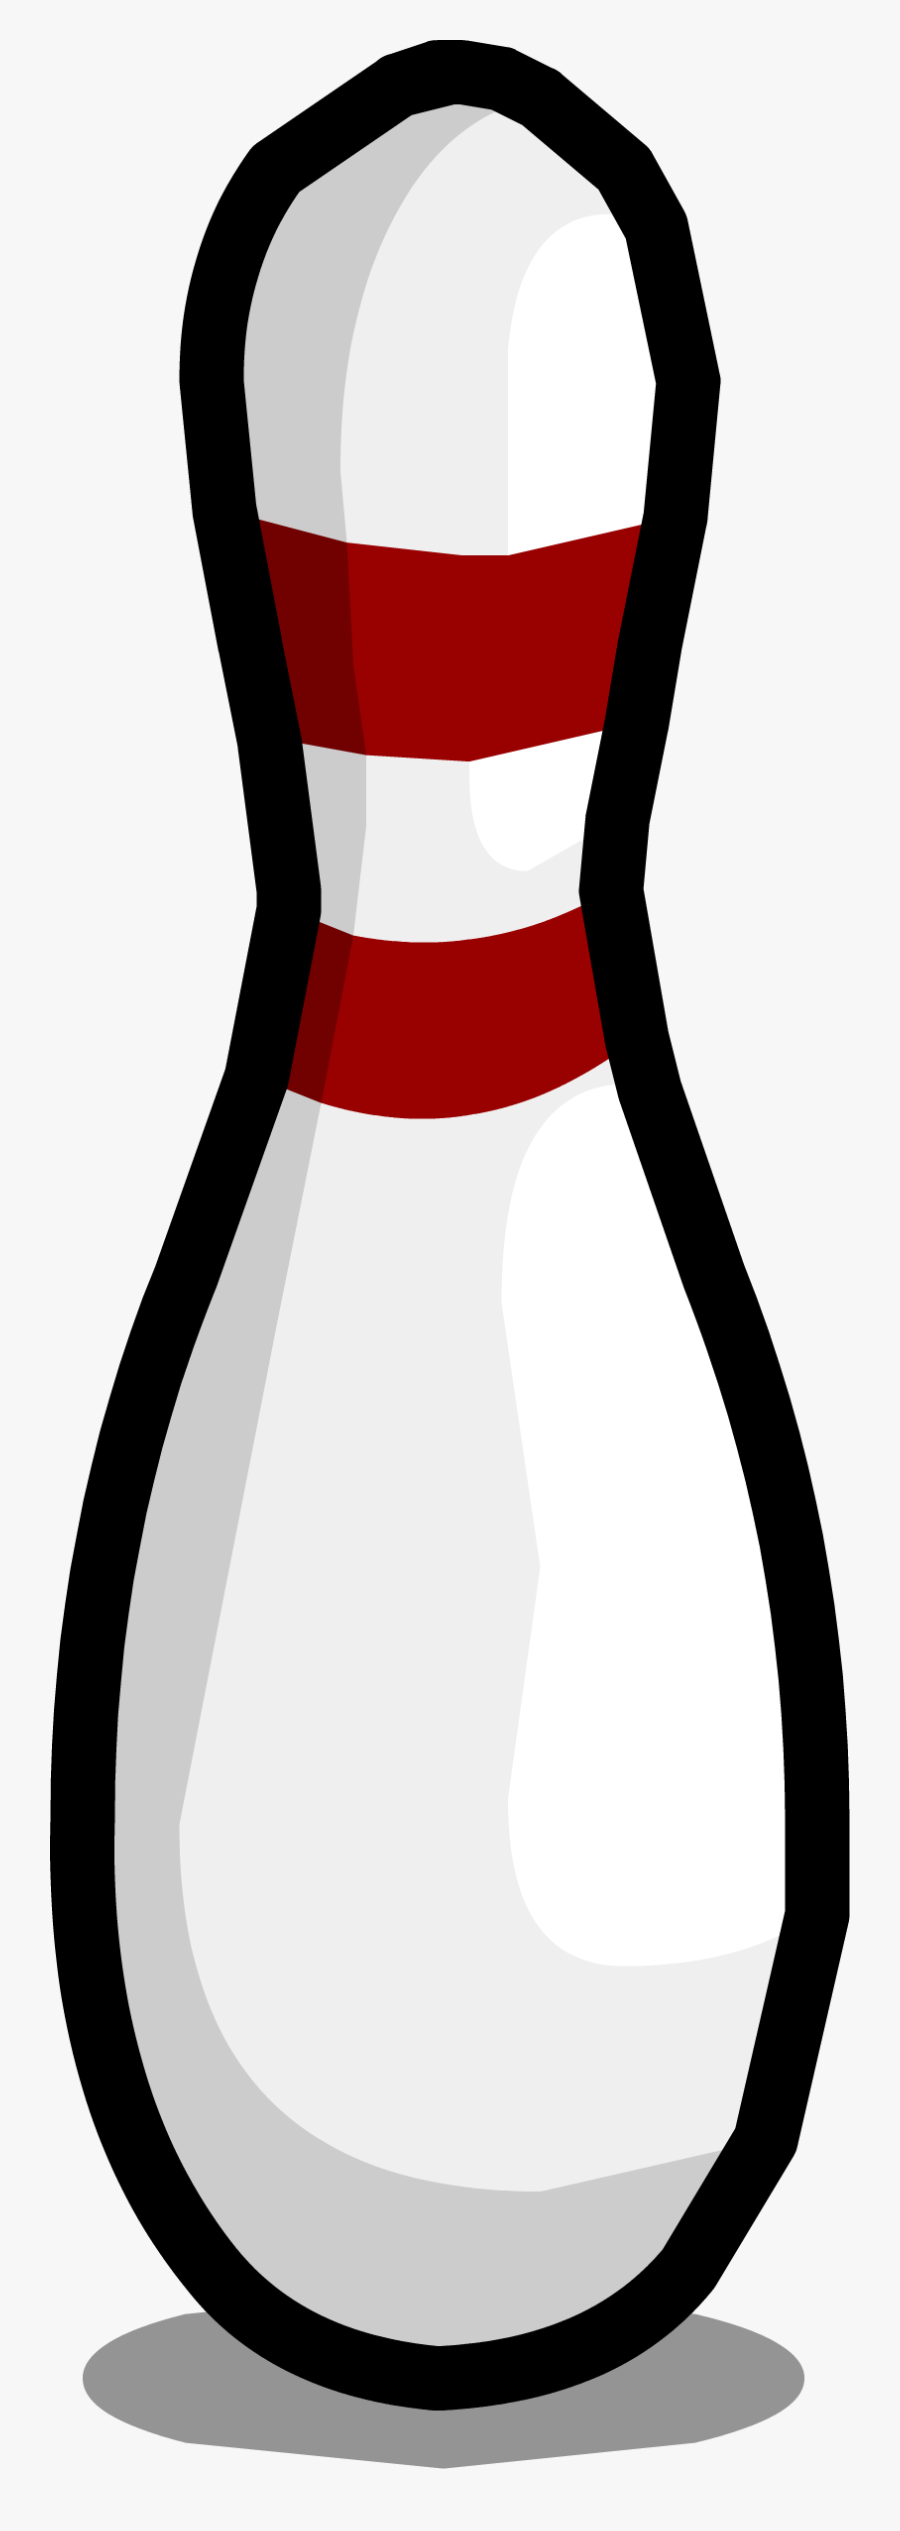 Club Penguin Wiki - Bowling Pin Cartoon Png, Transparent Clipart